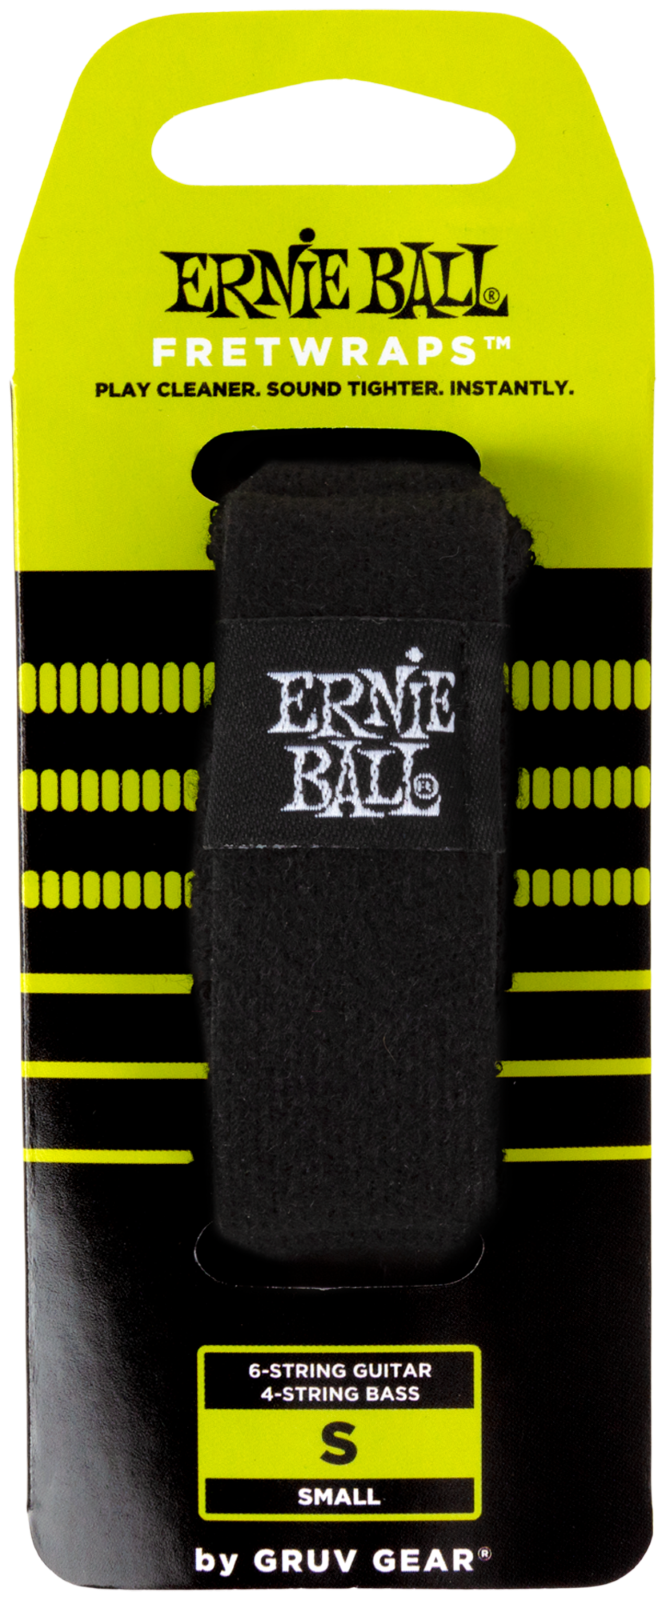 Ernie Ball FretWrap, Gruv Gear, Small : photo 1